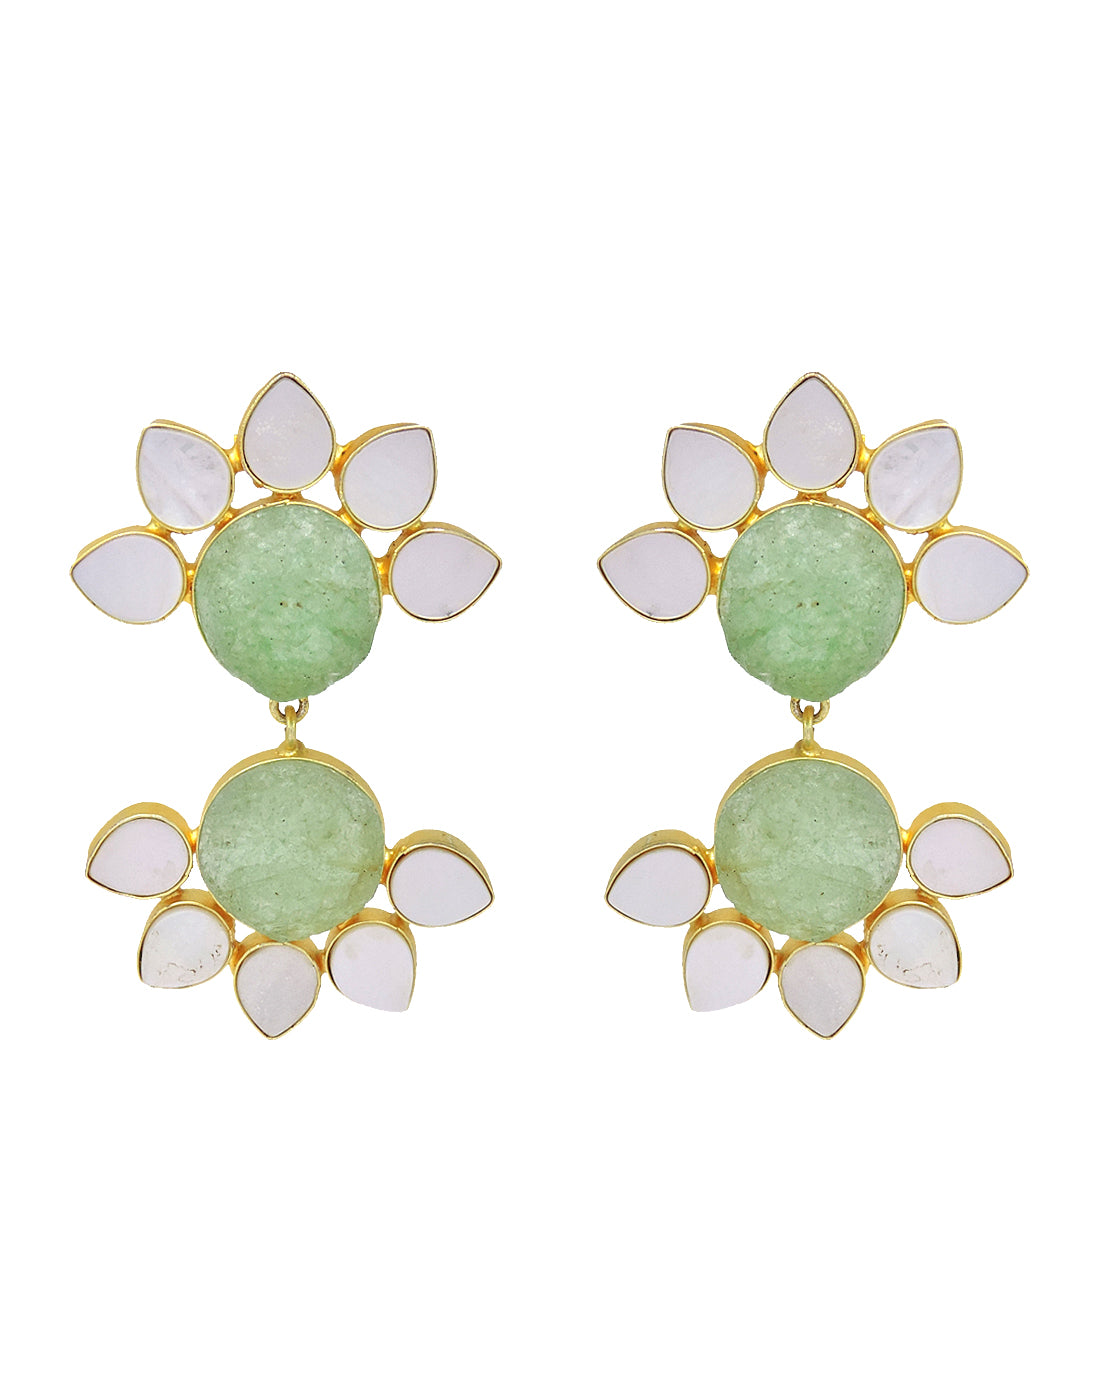 Twin Flora Earrings (Green Fluorite) - Statement Earrings - Gold-Plated & Hypoallergenic Jewellery - Made in India - Dubai Jewellery - Dori